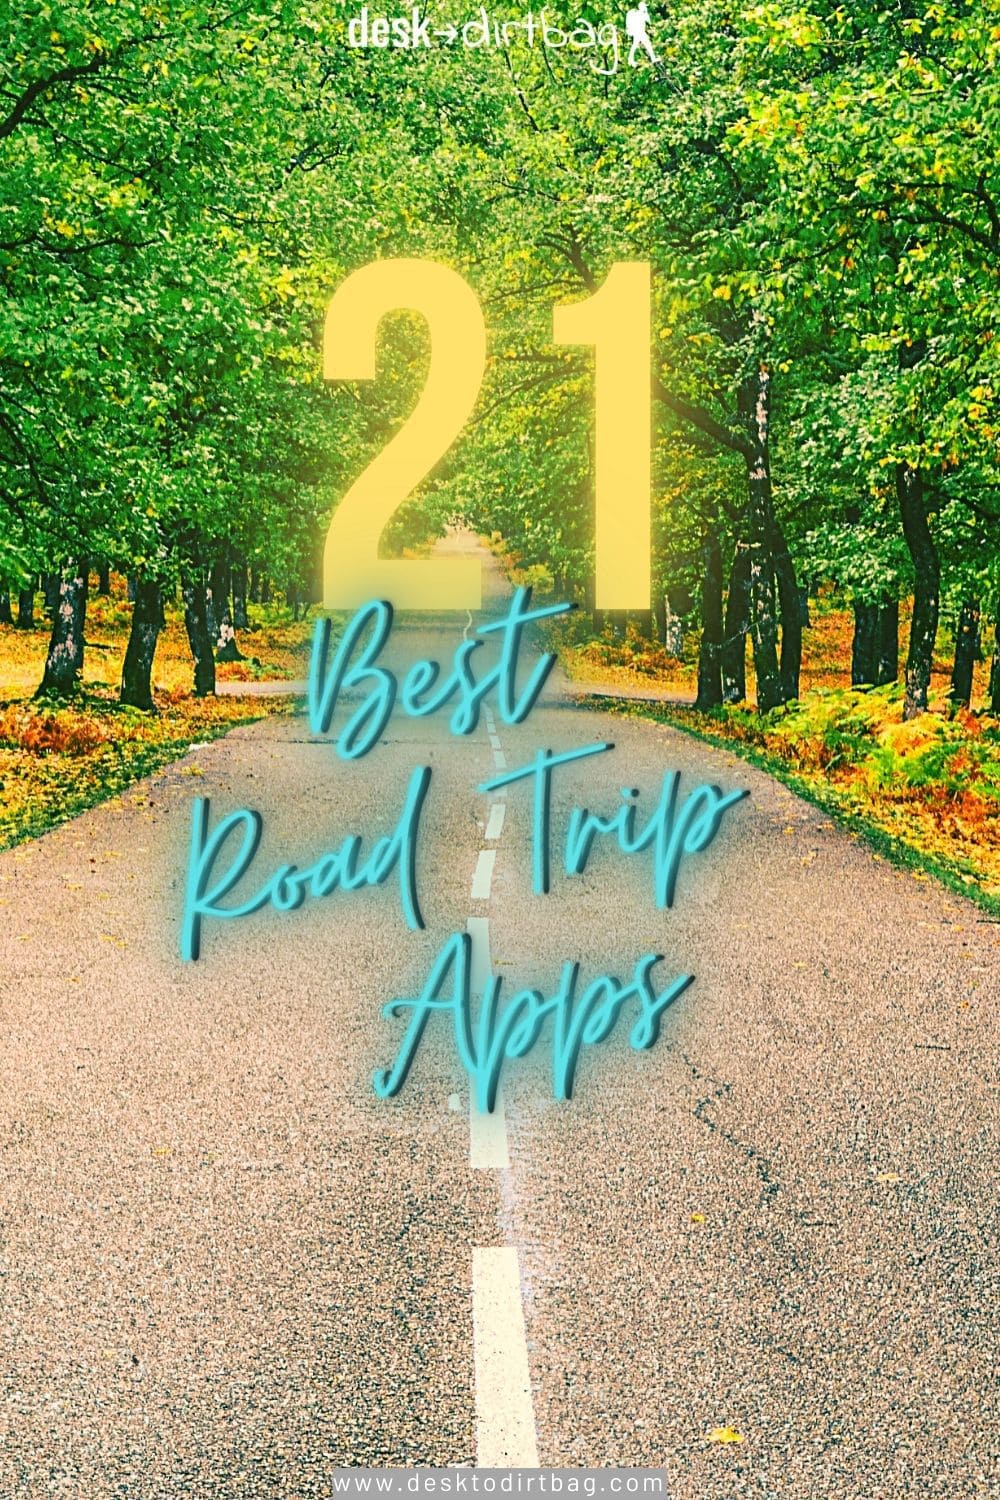 best road trip travel apps